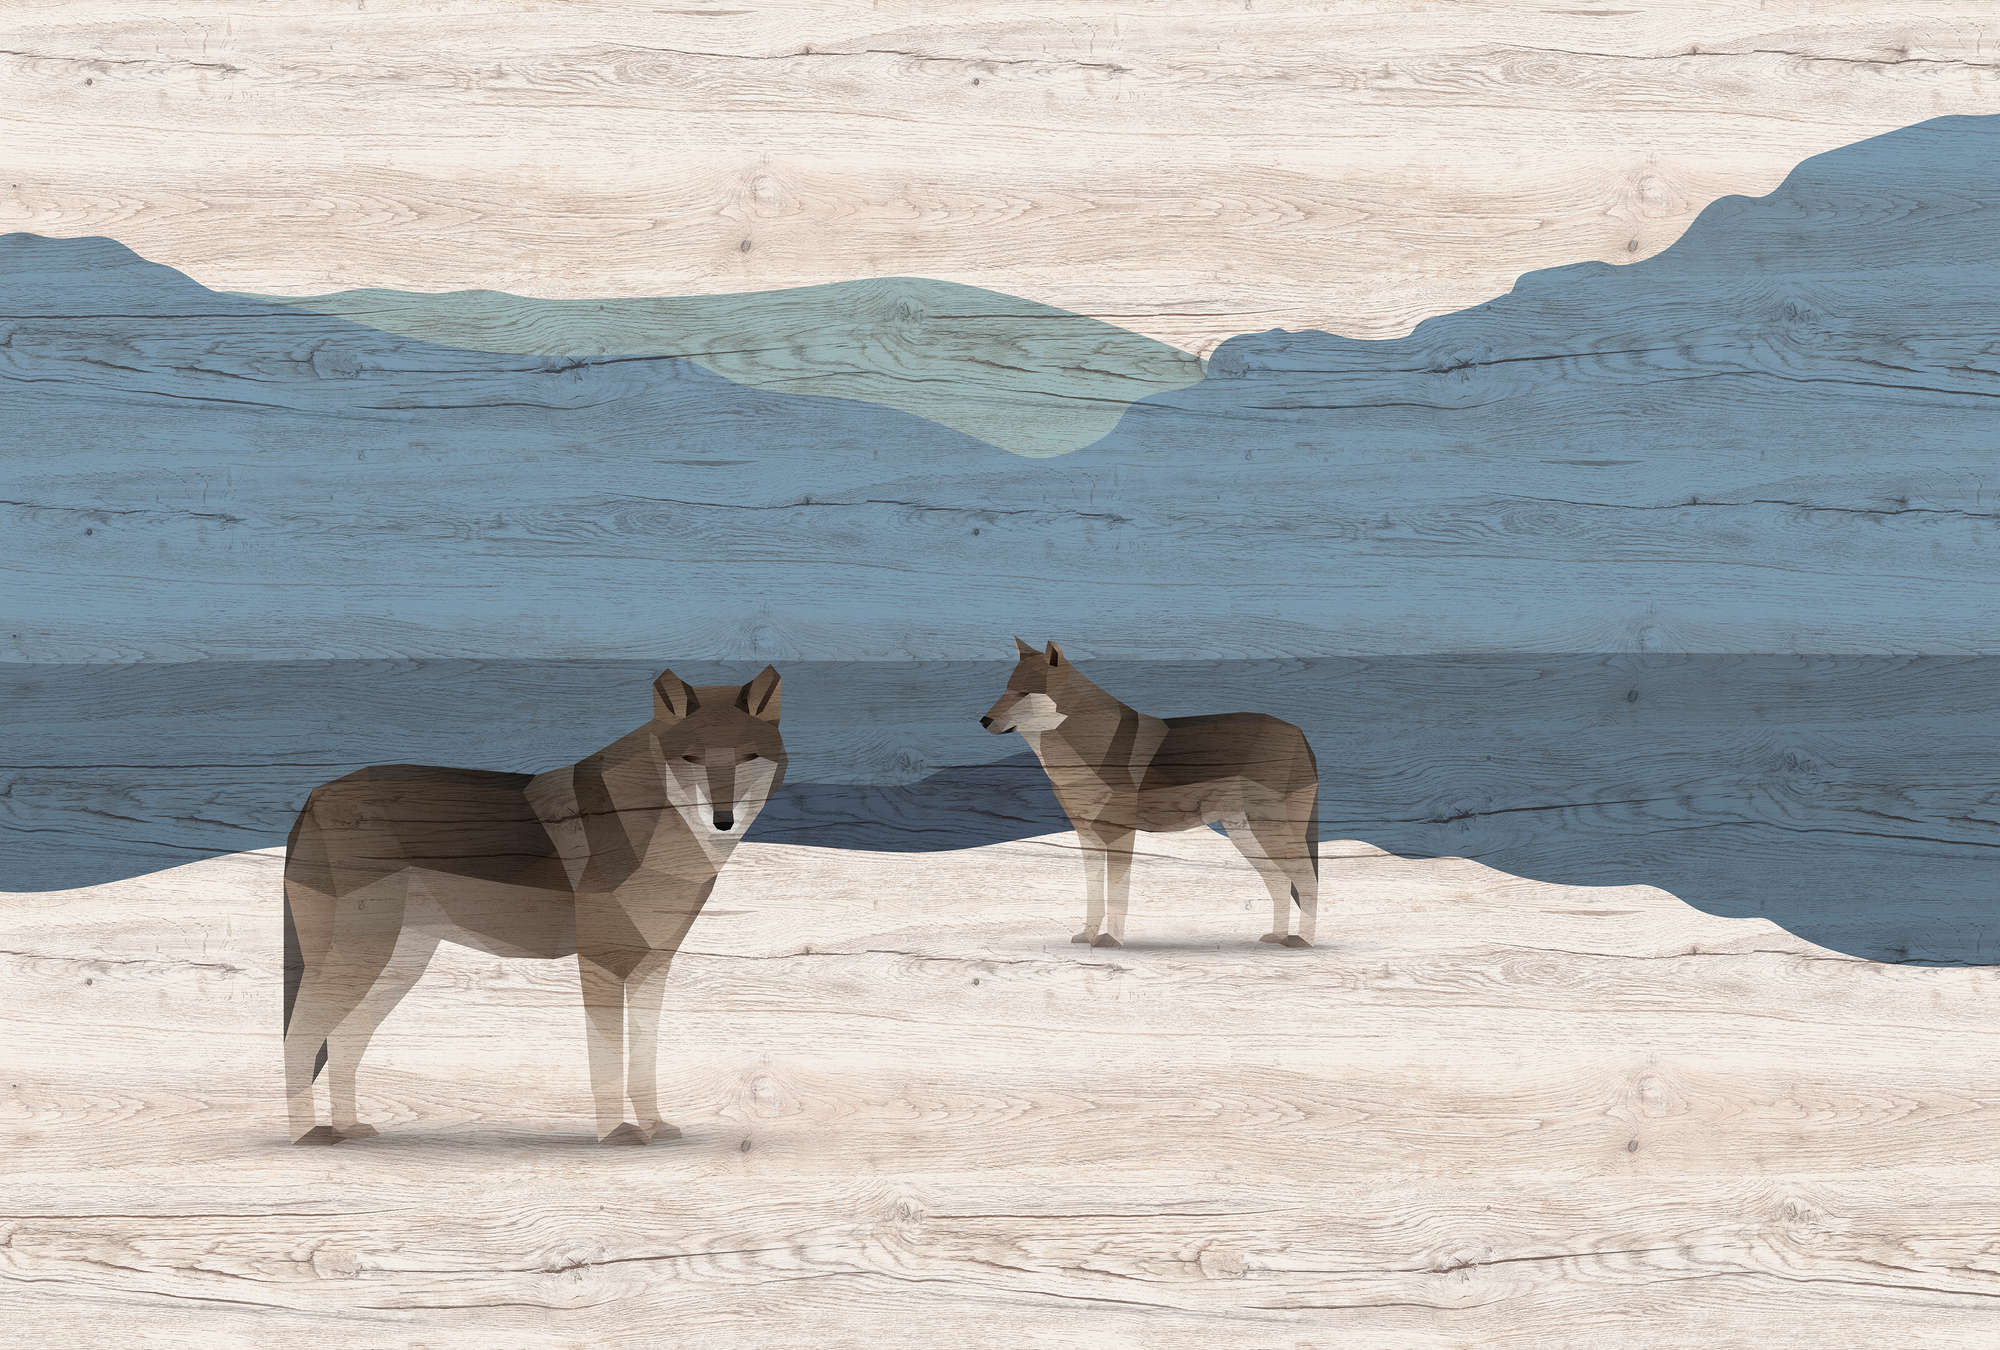             Yukon 1 - Mountains & Dogs muurschildering met houtstructuur
        